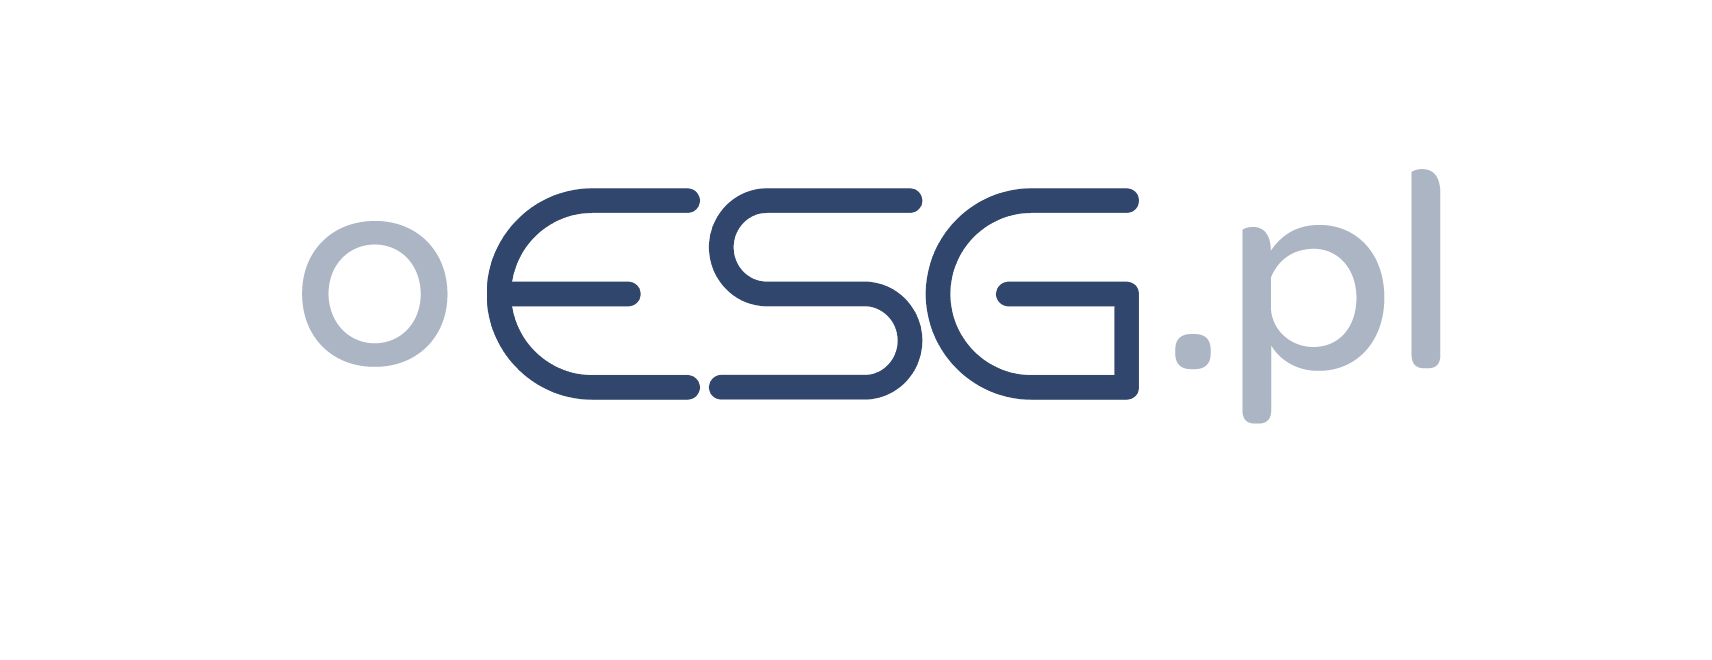 Logotyp ESG.PL